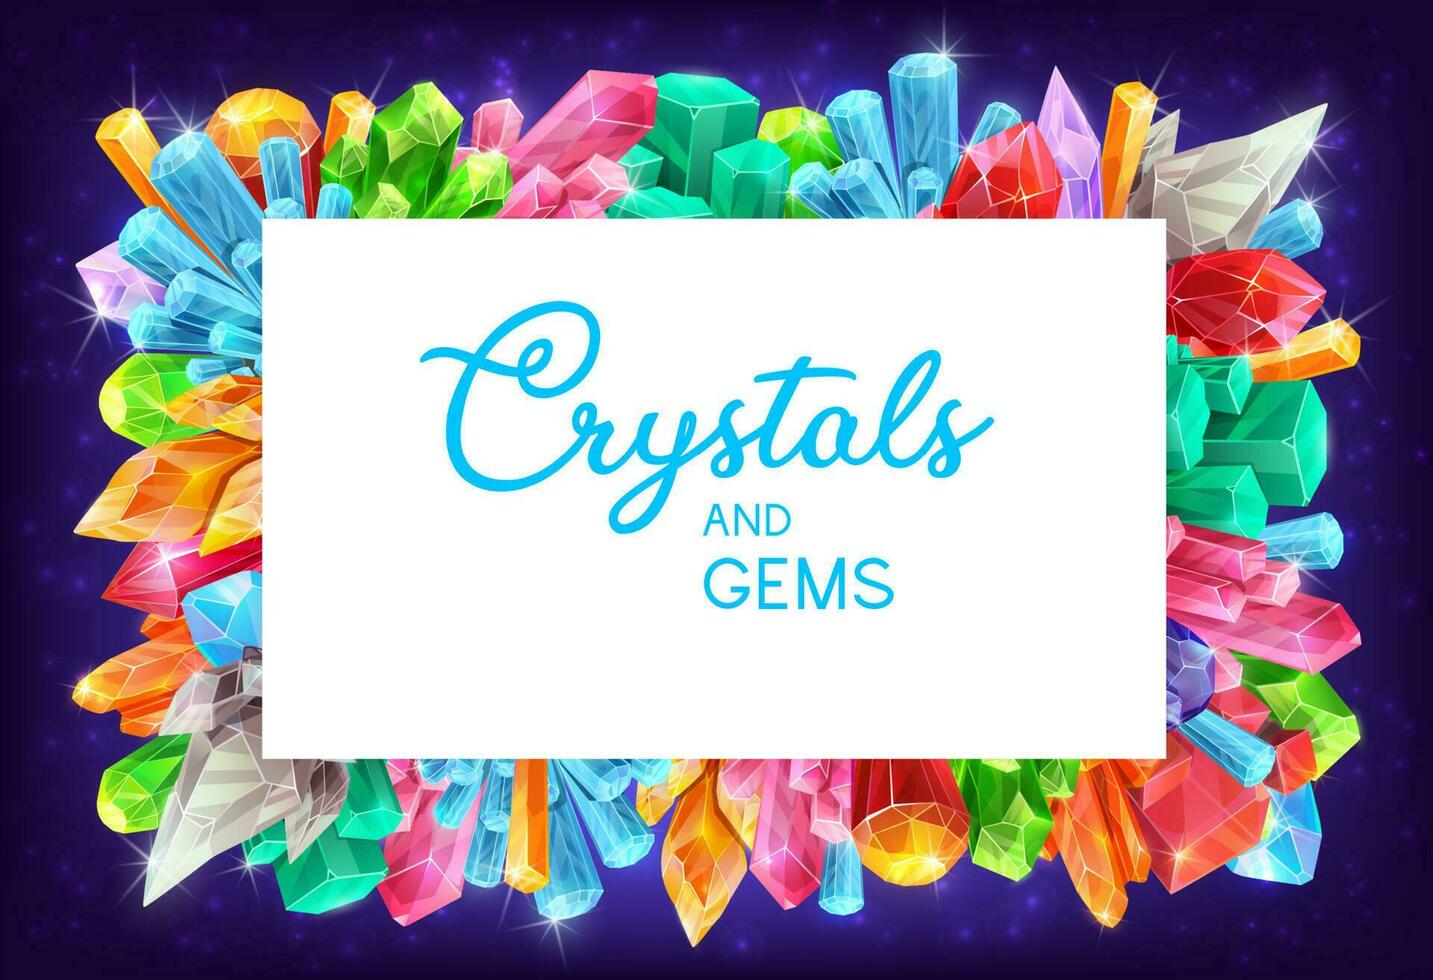 Crystals and gems, cartoon gemstones vector frame